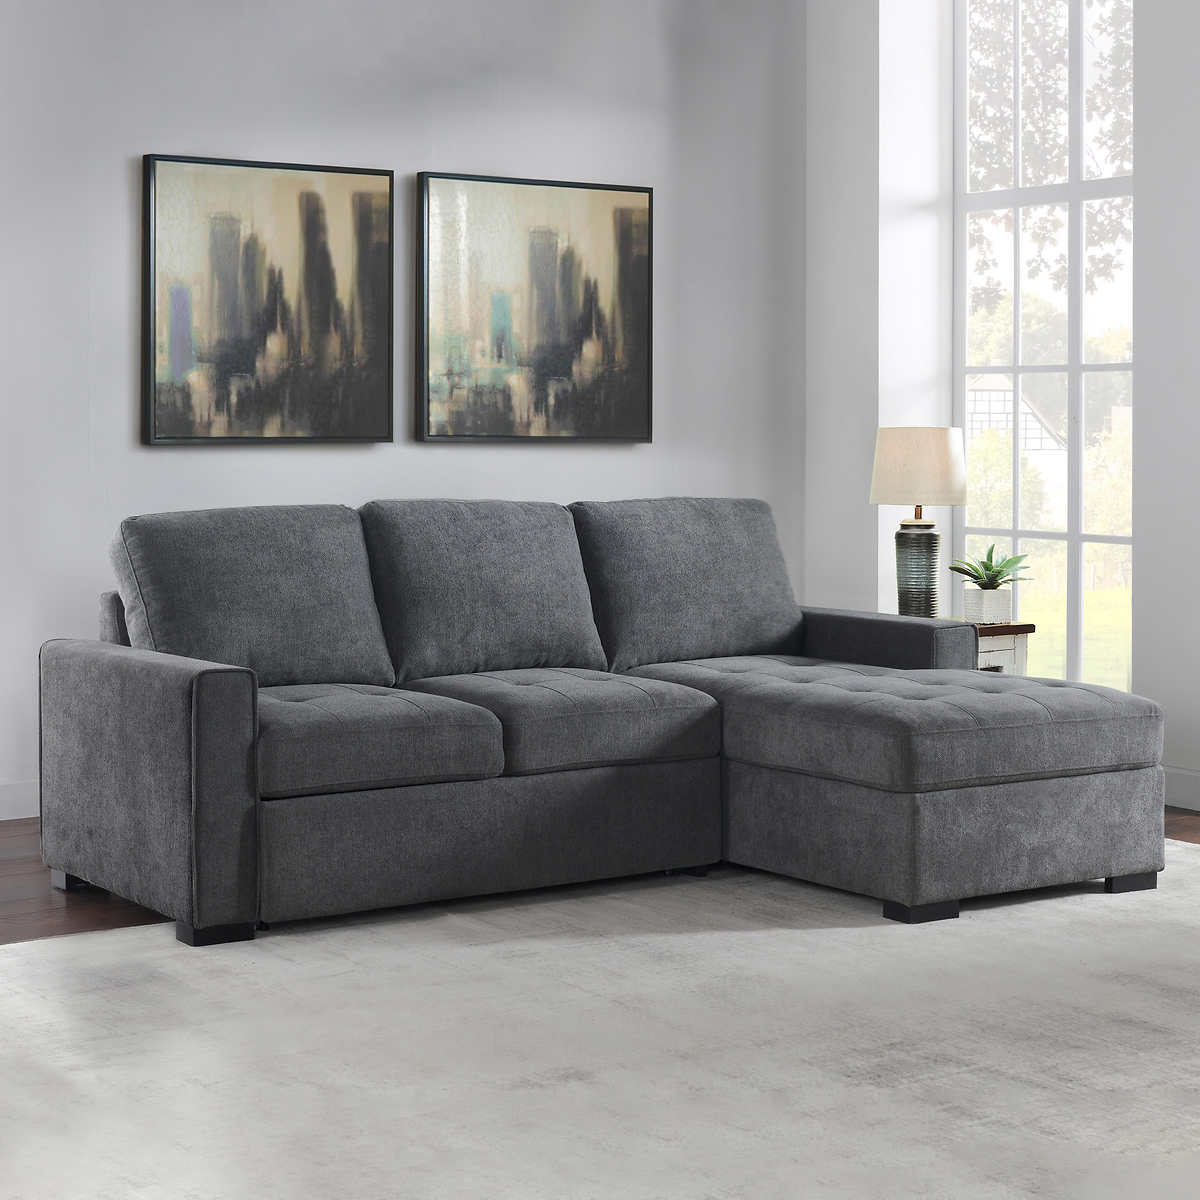 Kendale Sleeper Sofa With Storage, Affordable Sleeper Sofa Reddit